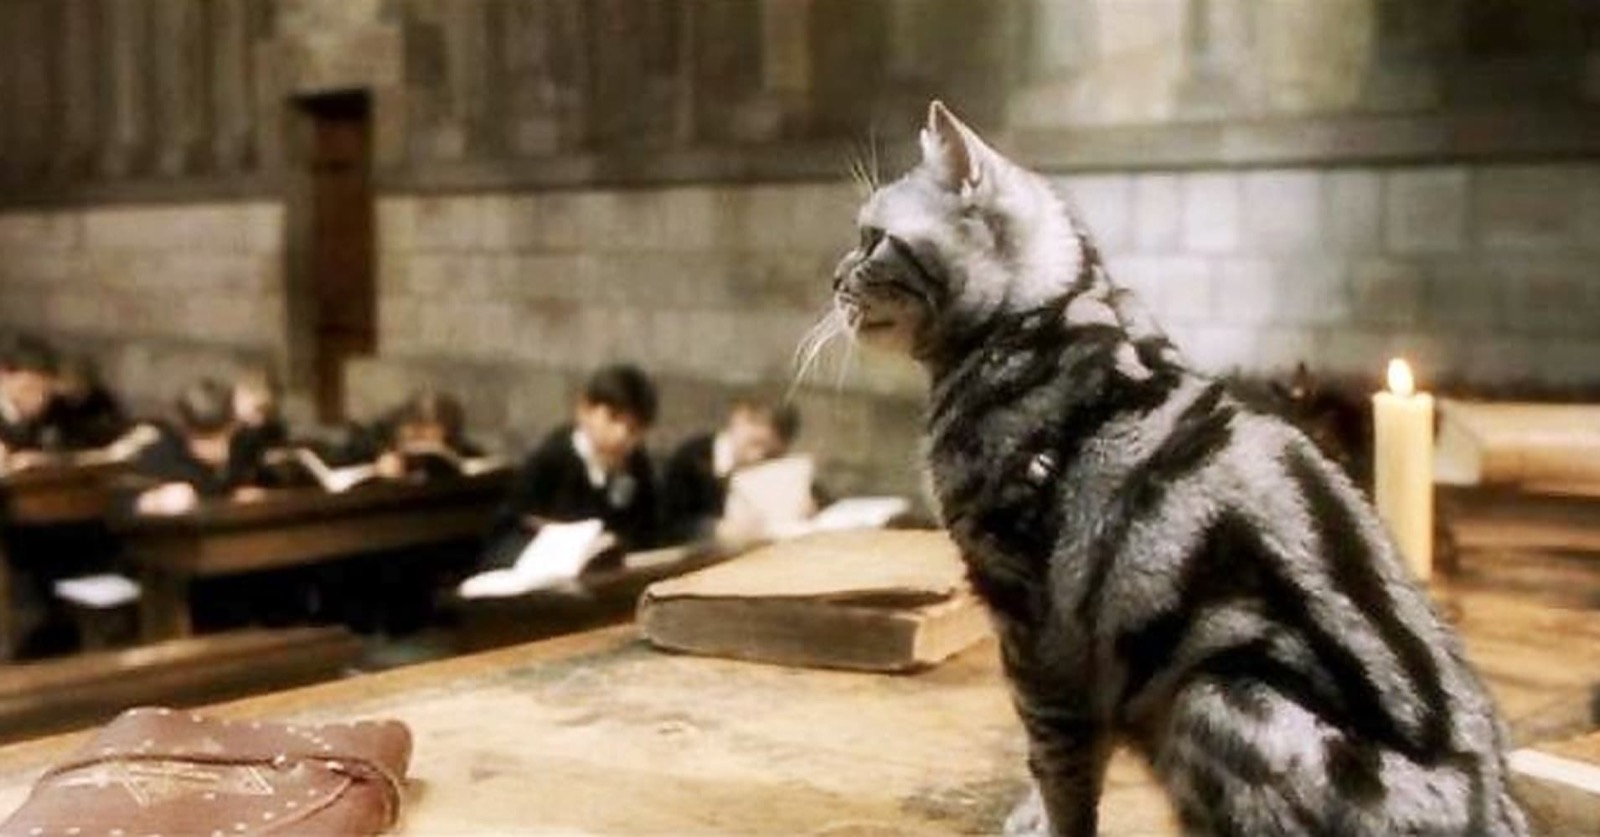 Harry Potter True Or False Quiz McGonagall's Animagus form